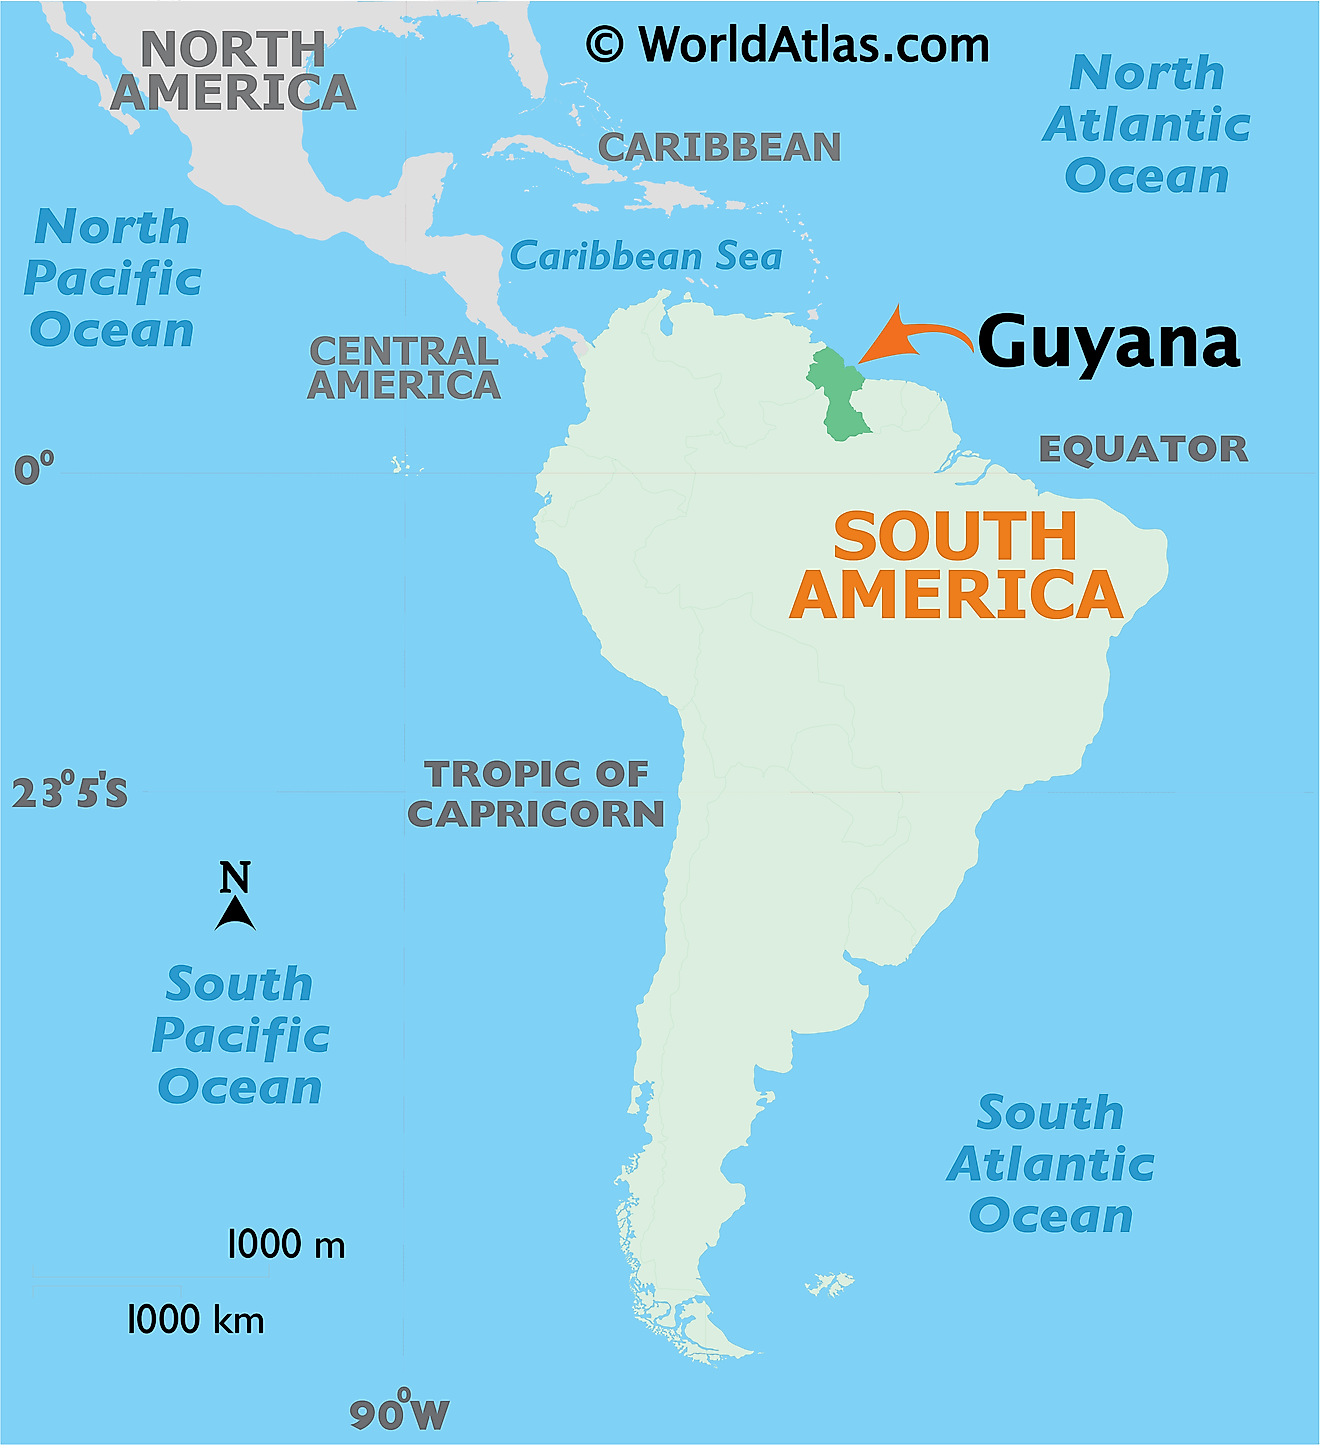 Where is Guyana?